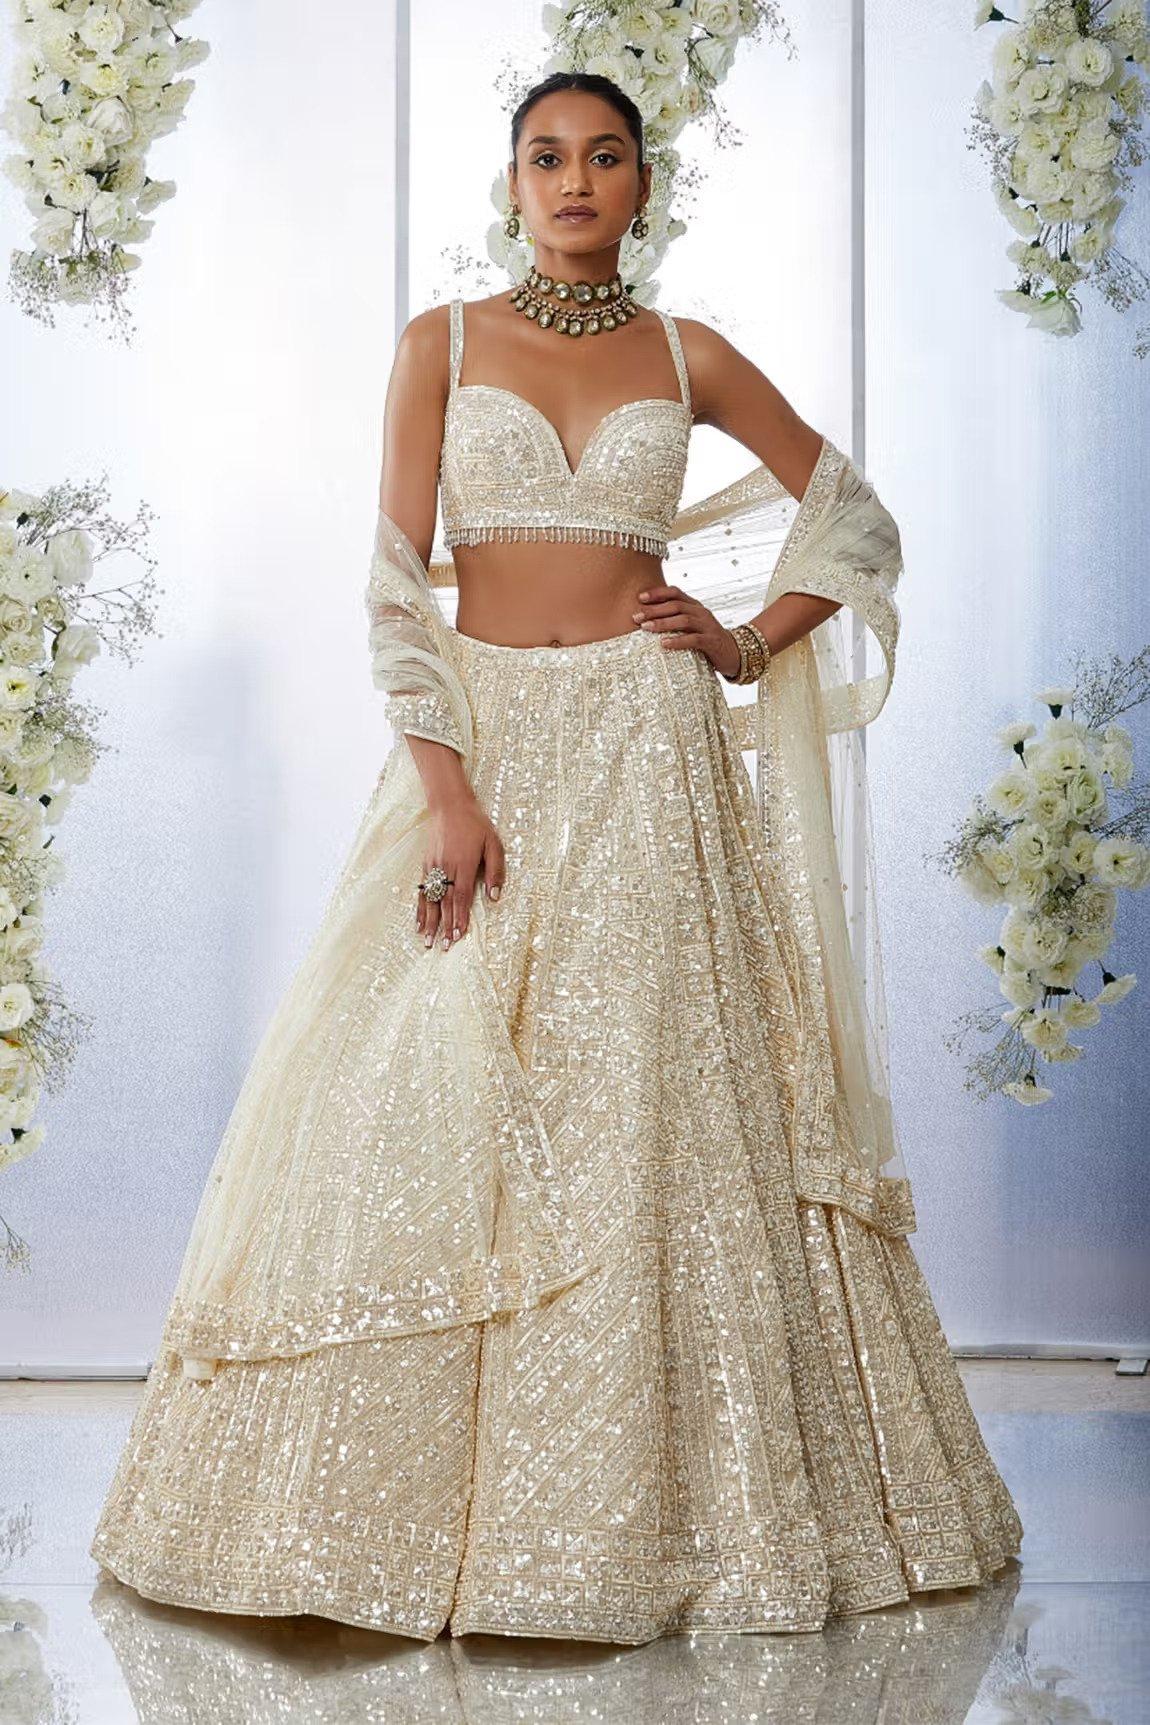 Very Different & Pretty Floral Jewellery Designs Worn by Real Brides! |  WeddingBazaar